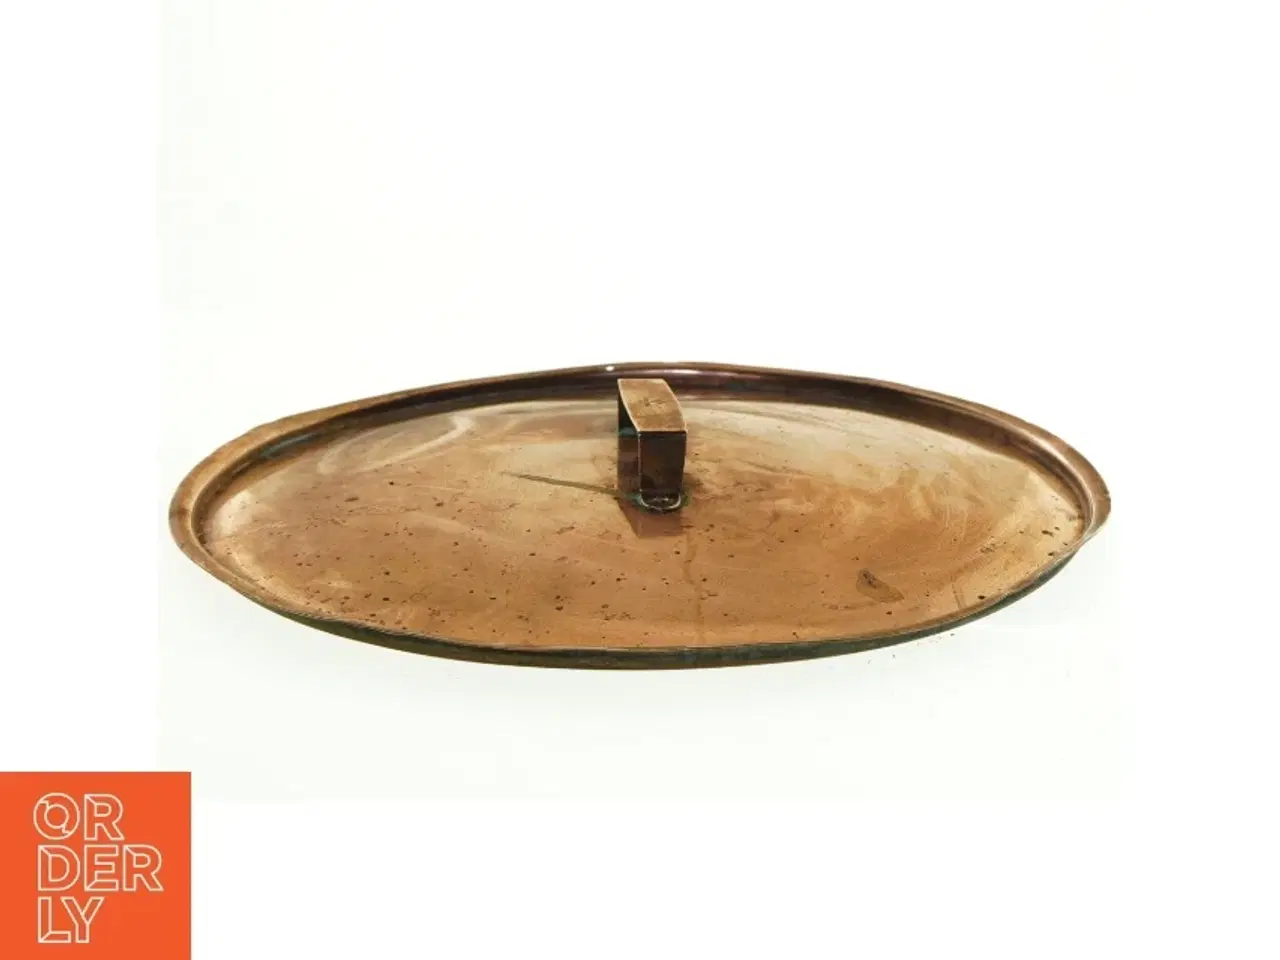 Billede 1 - Låg i kobber, diameter 31 cm